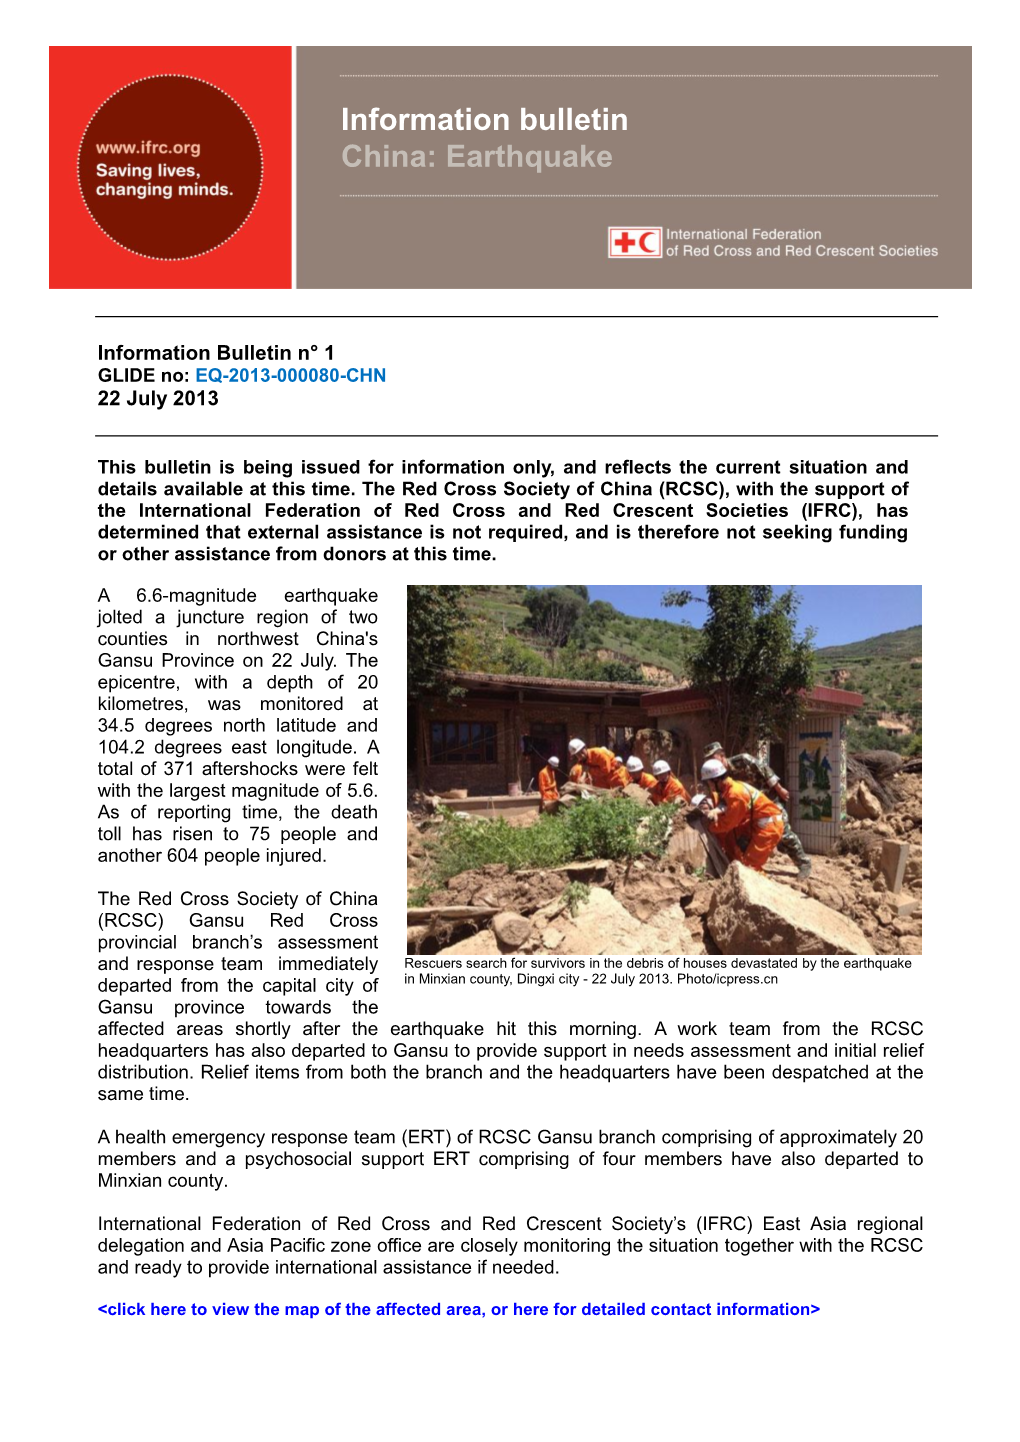 Information Bulletin China: Earthquake